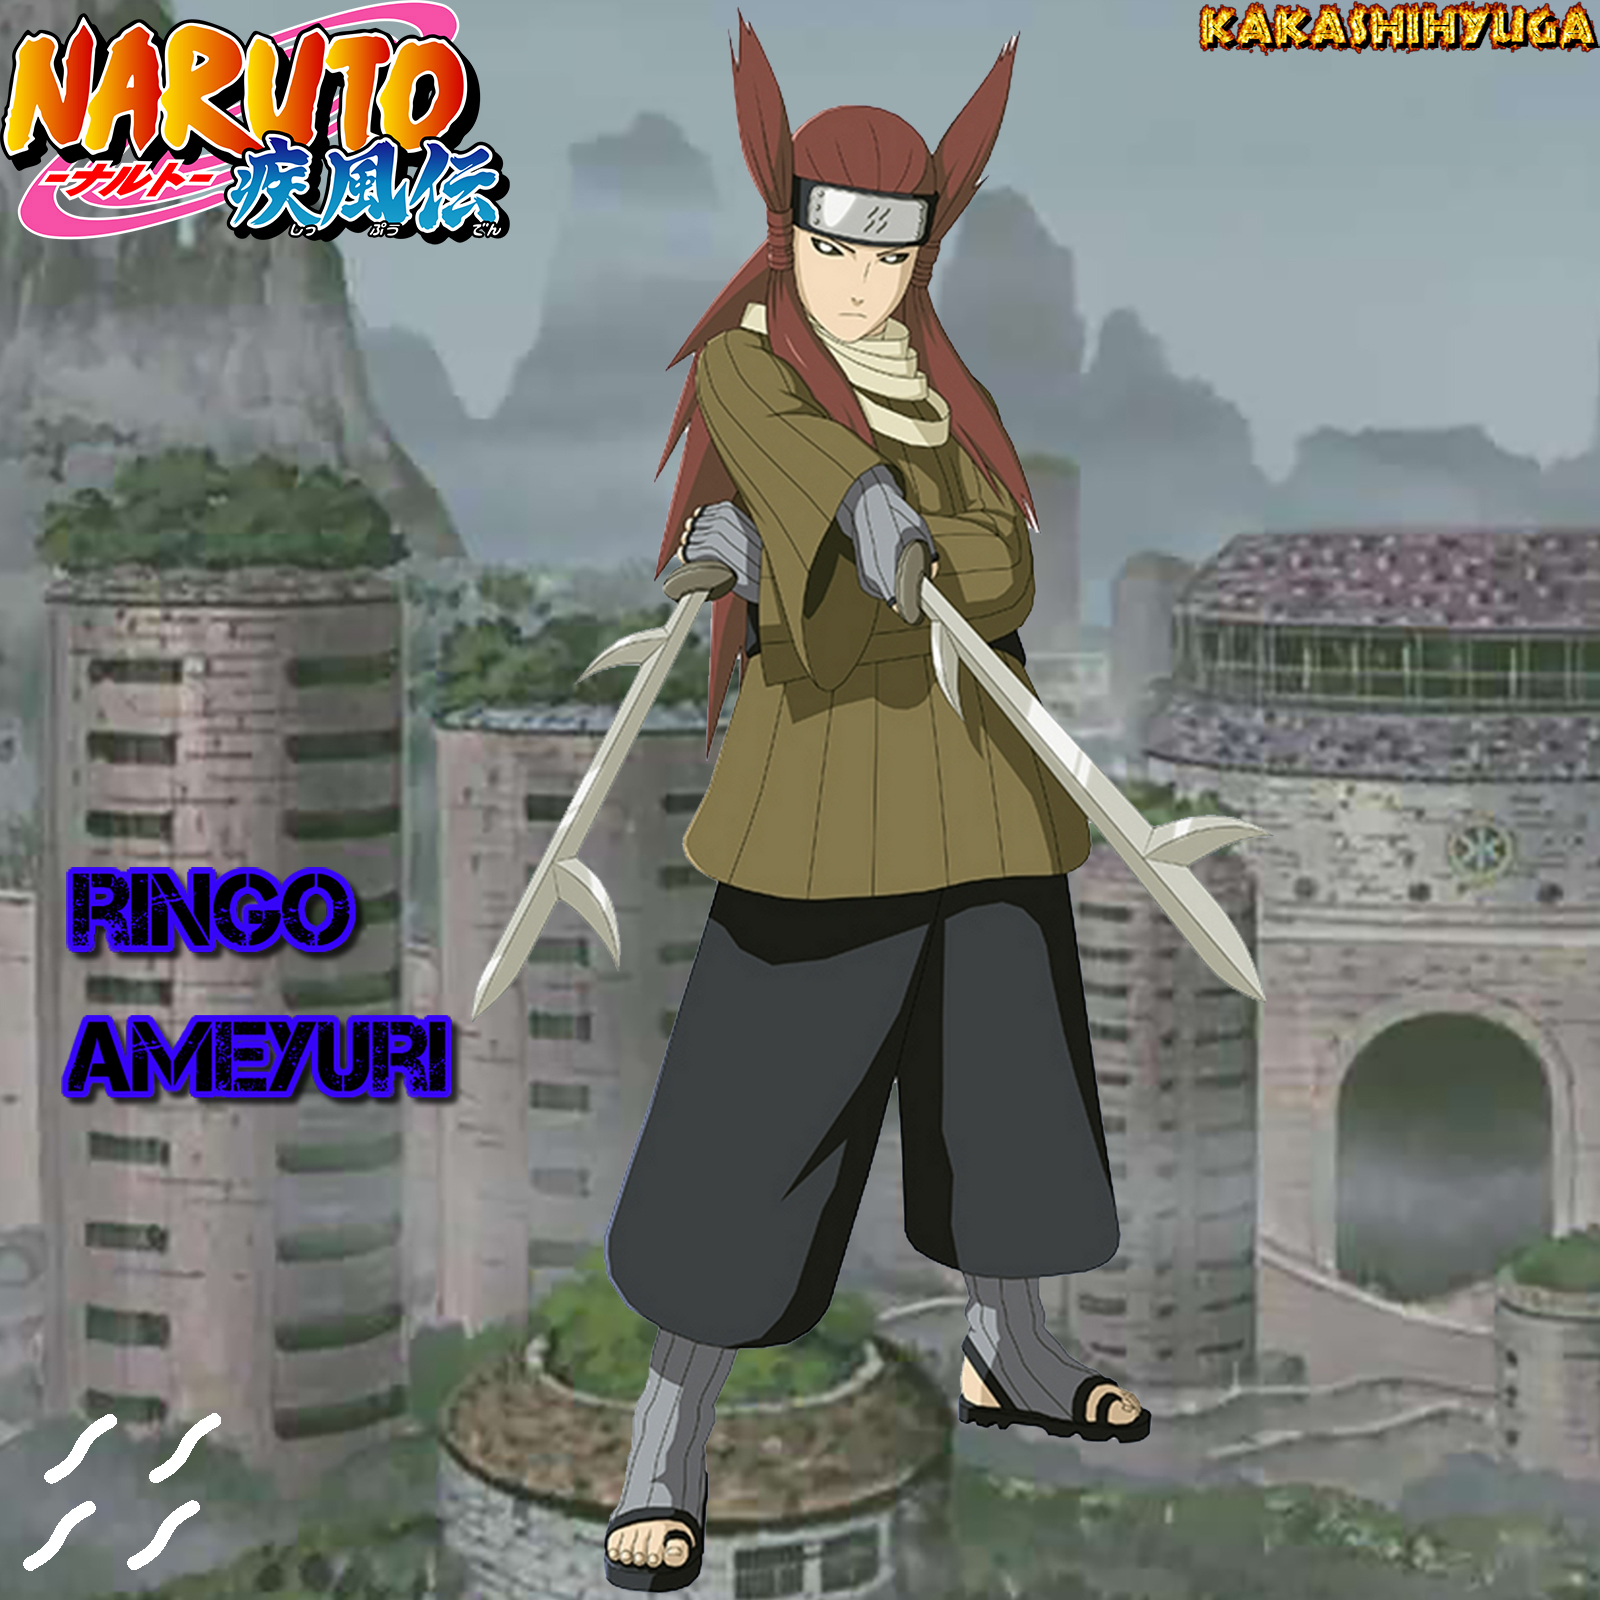 Boruto OC] Ameyuki Ringo by Maripepa-Art on @DeviantArt  Boruto, Naruto  shippuden characters, Naruto character info